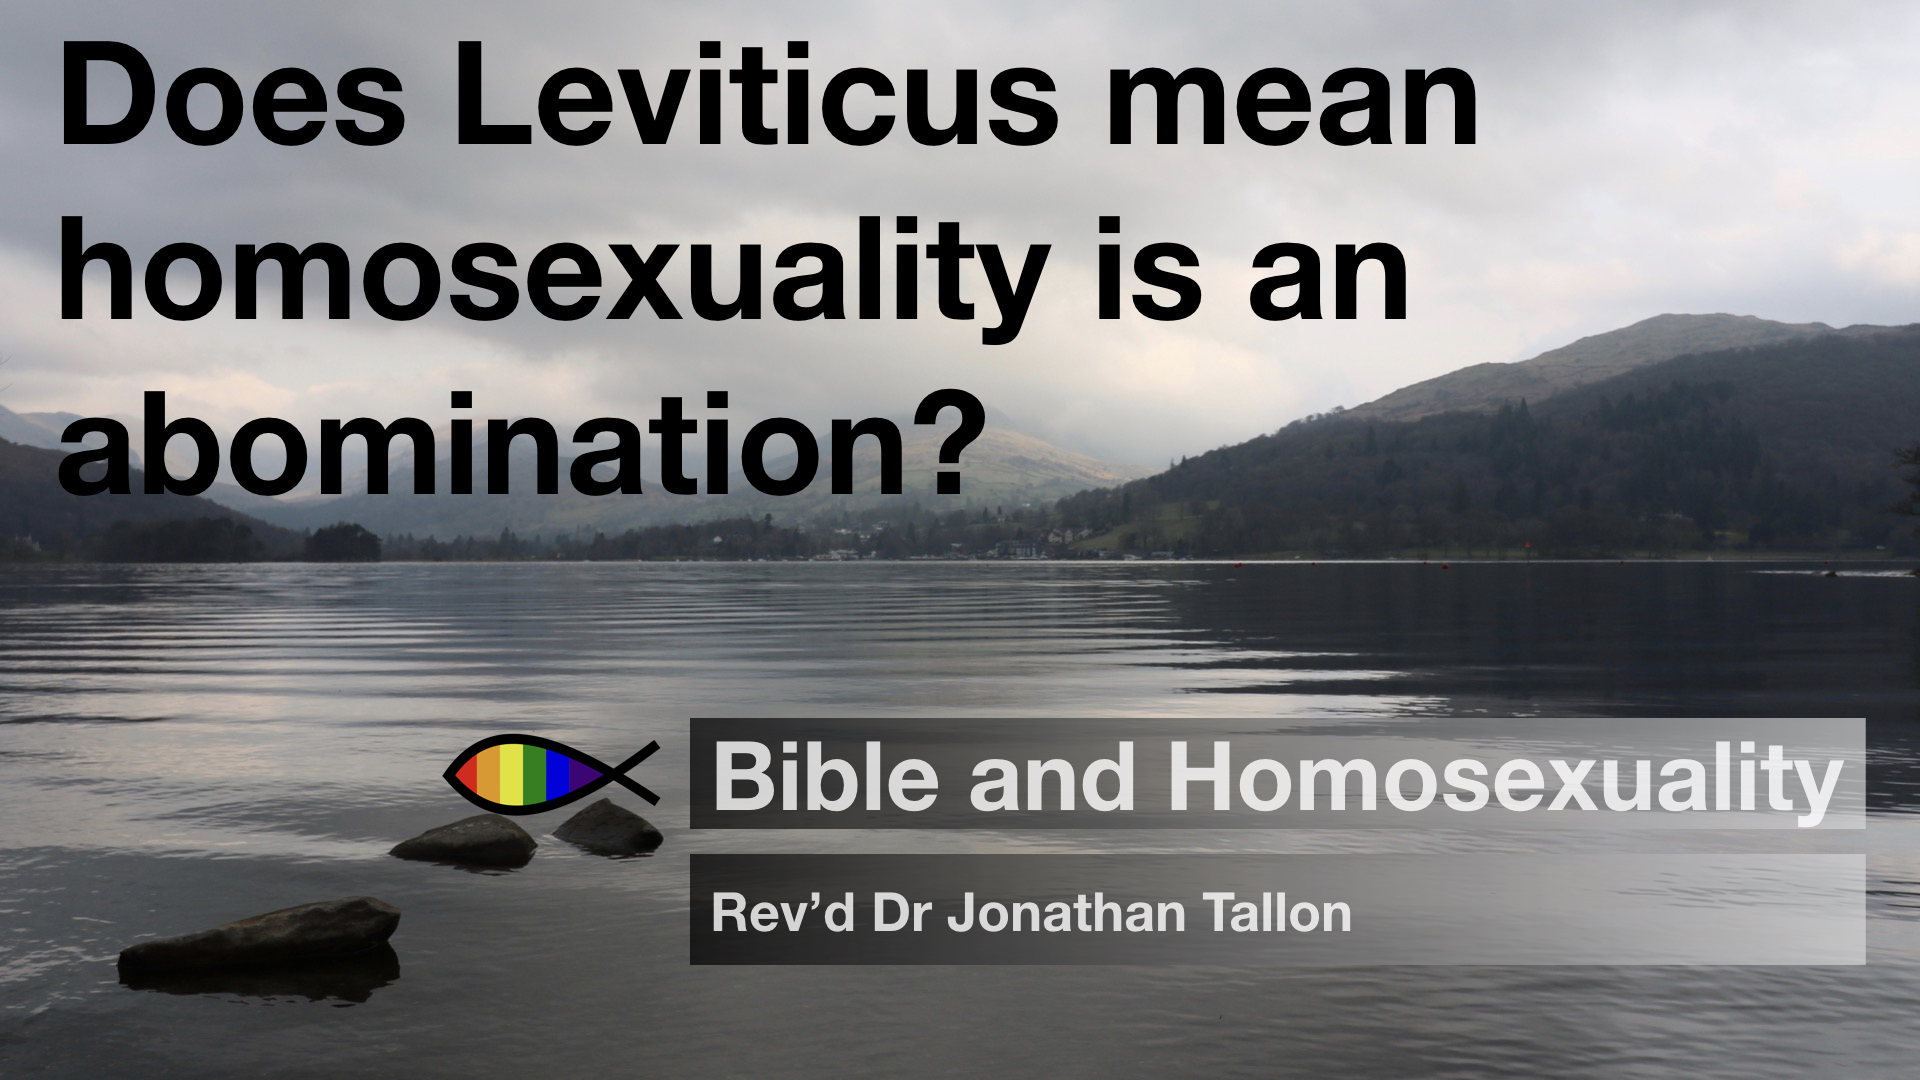 www.bibleandhomosexuality.org